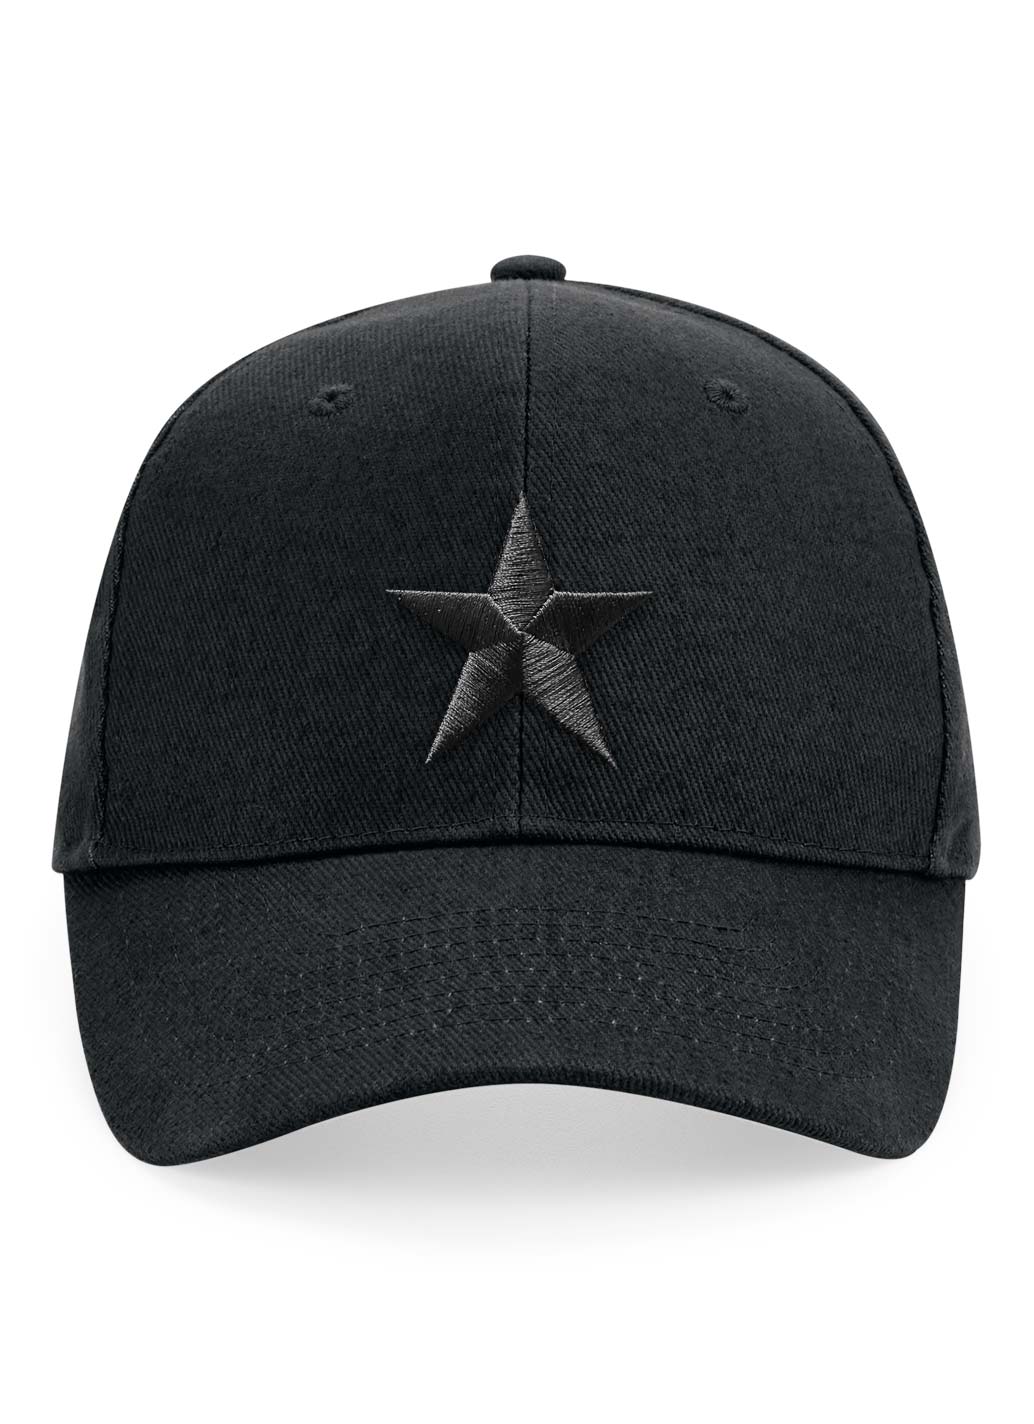 Black Star Baseball Cap